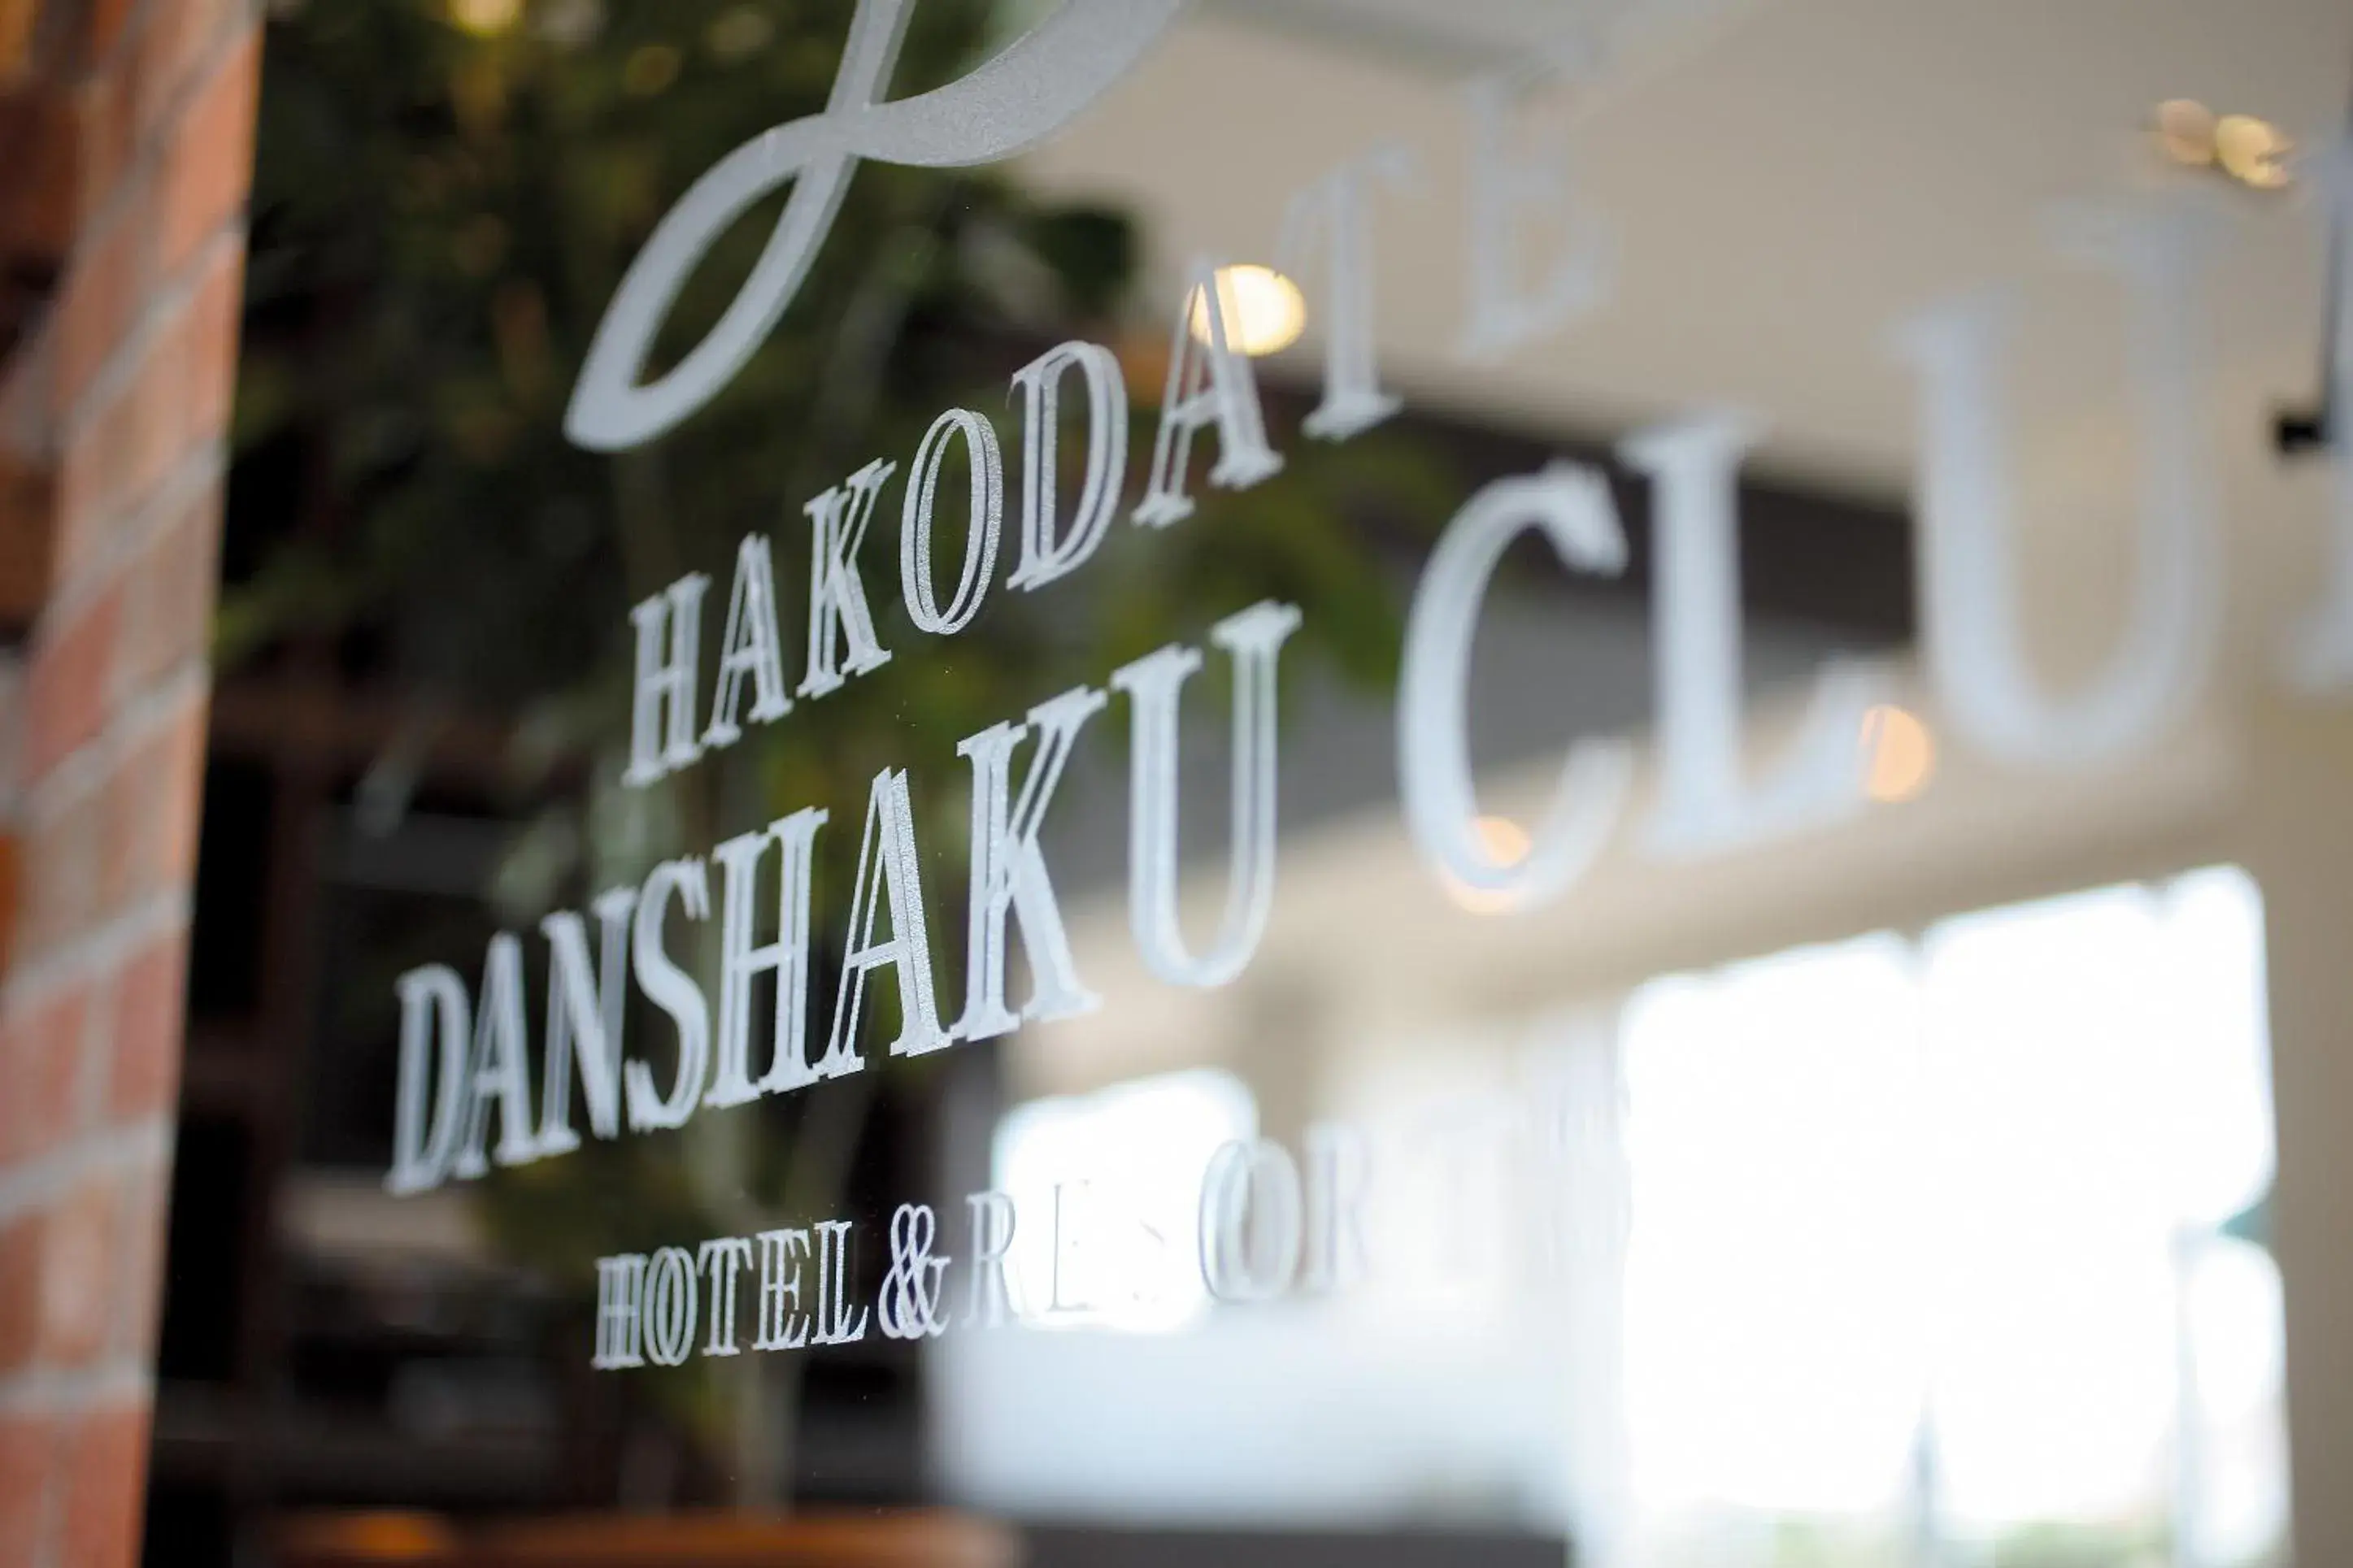 Other in Hakodate Danshaku Club Hotel & Resorts